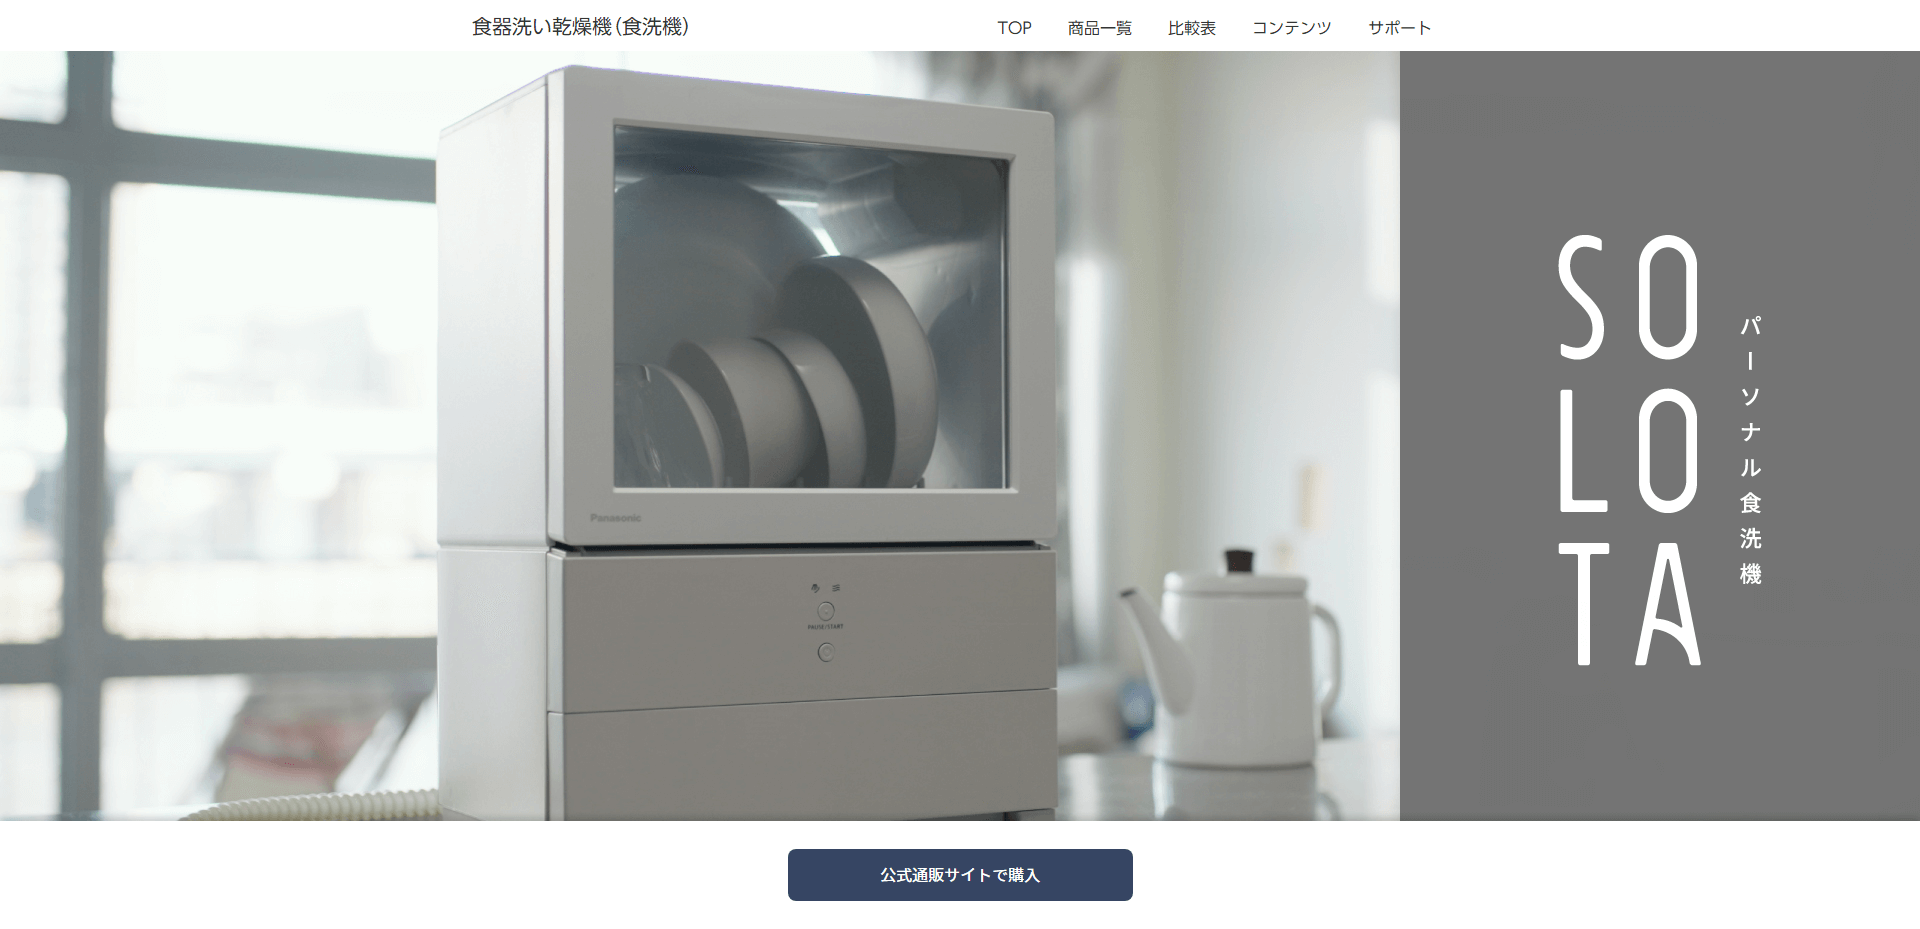 Panasonic 食器洗い乾燥機“SOLOTA”（ソロタ）を、ほぼ無料、300円以下